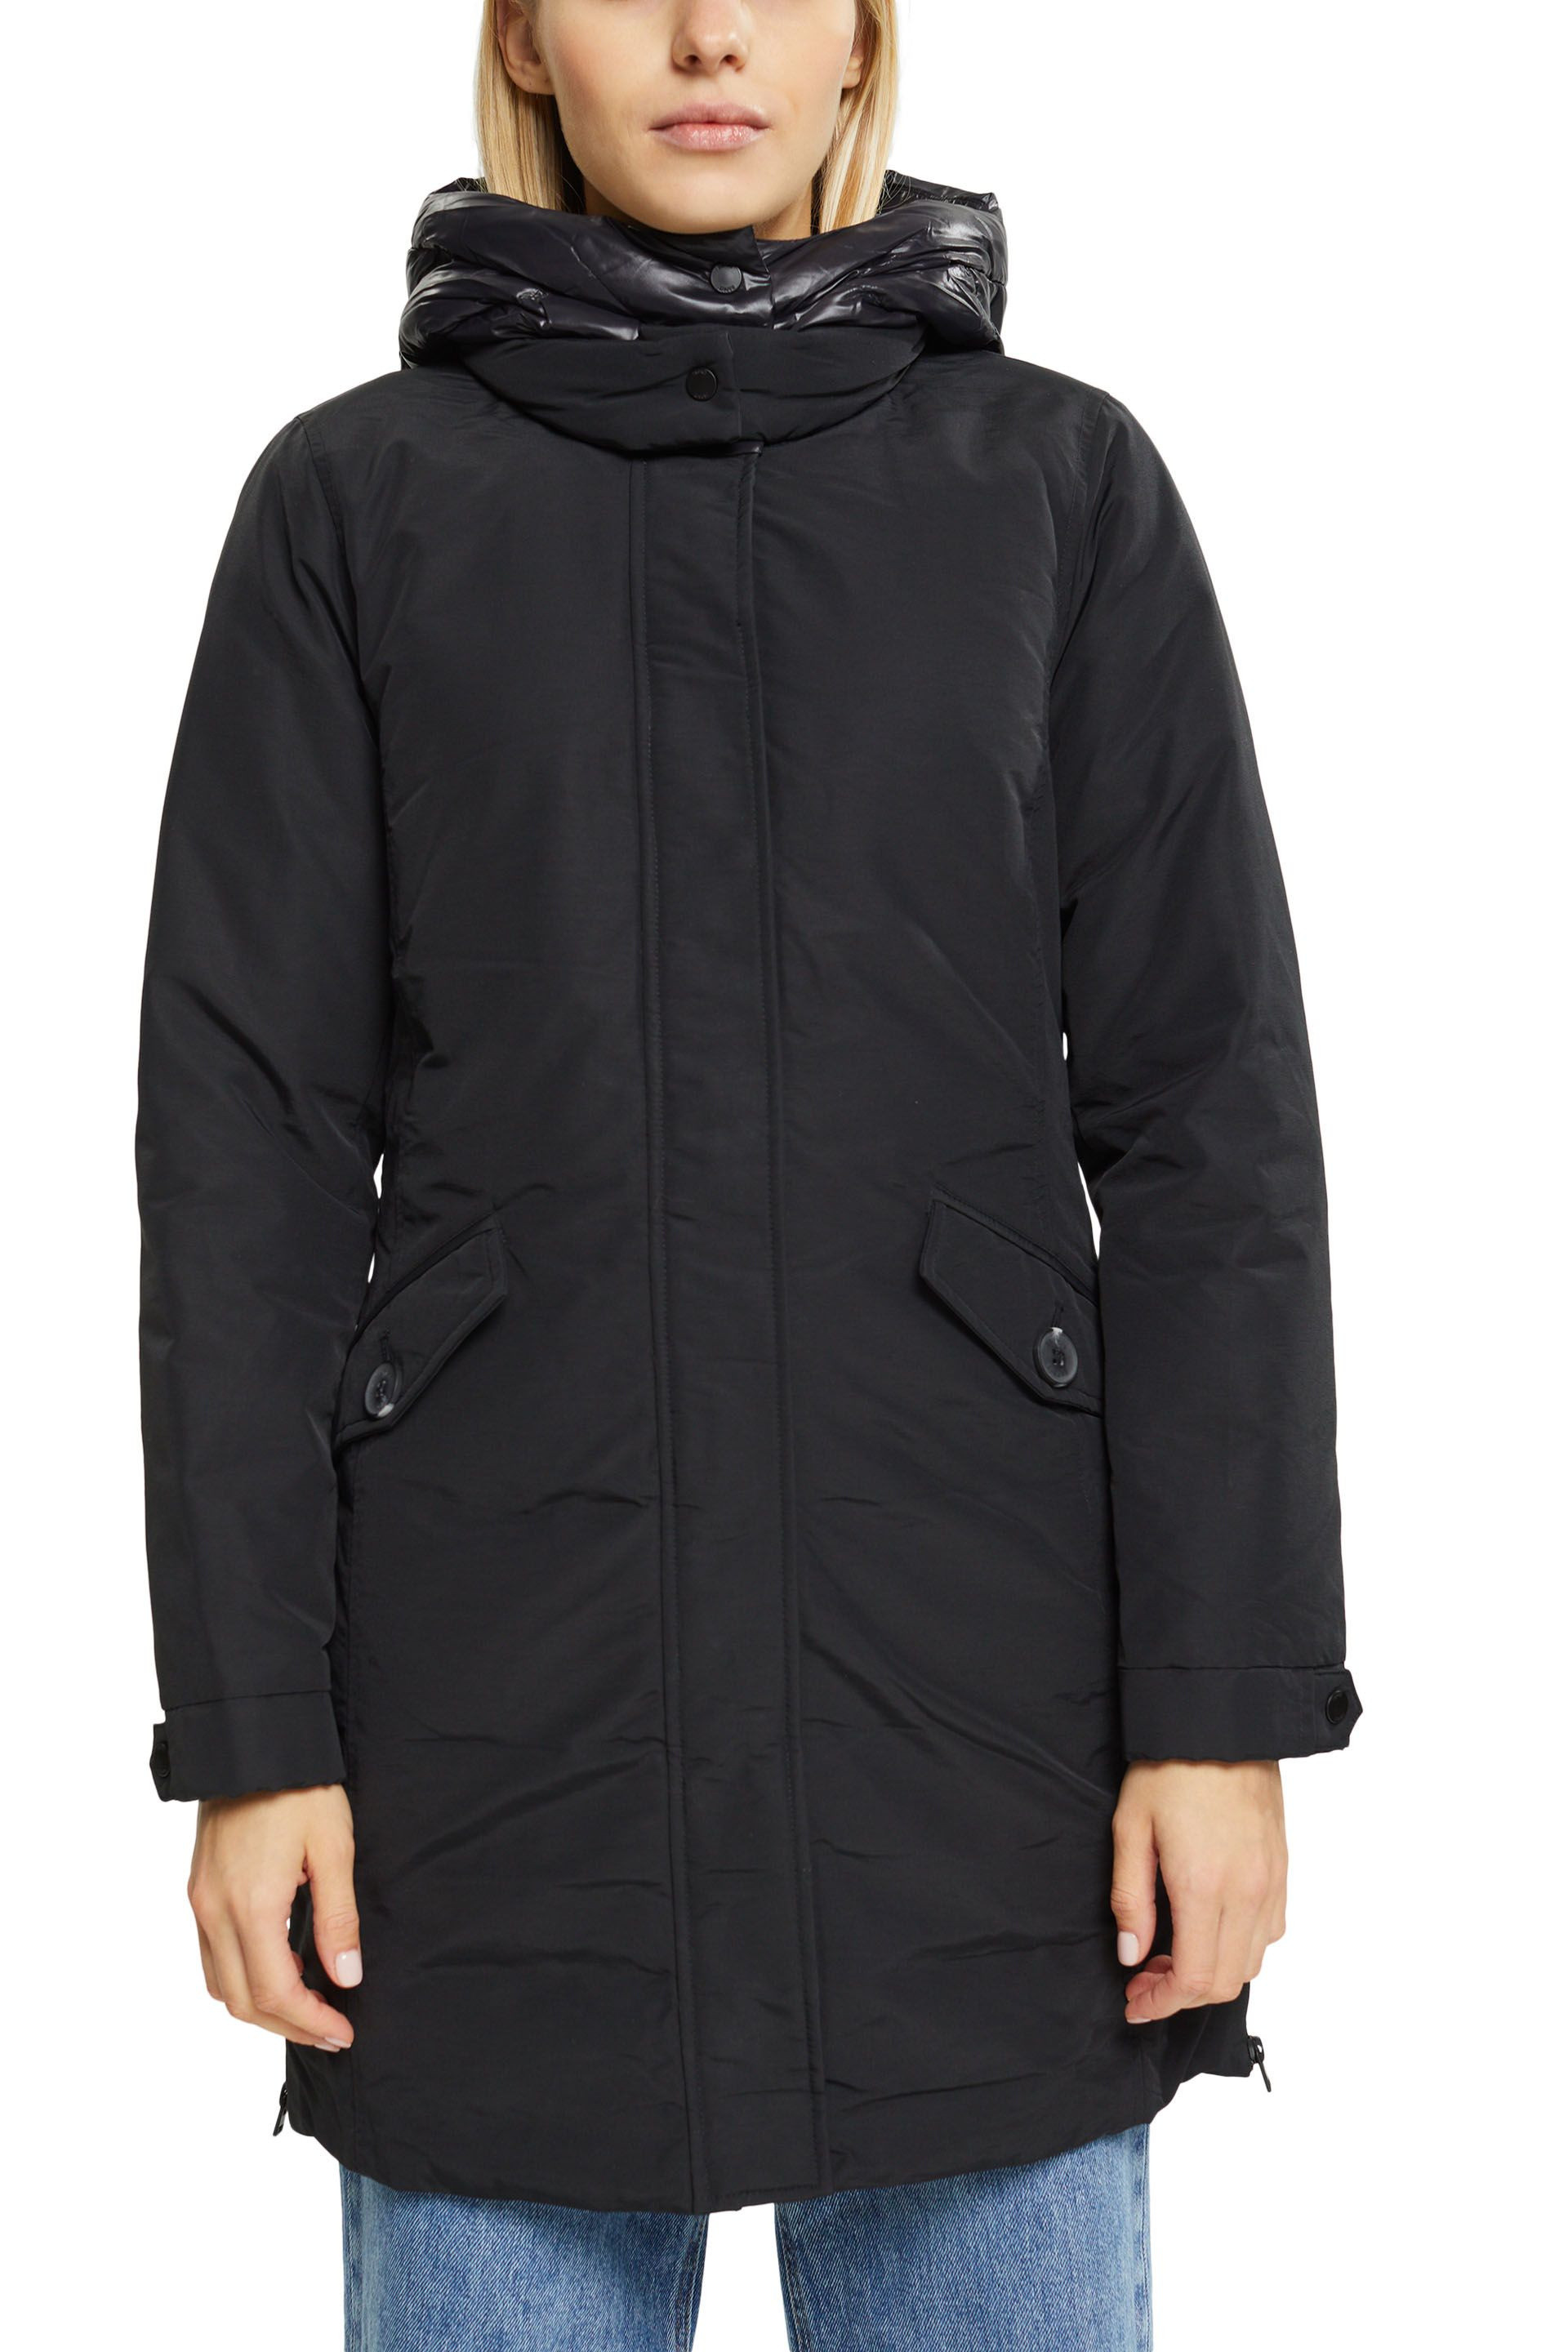 Hooded jacket with padding, Black, large image number 1